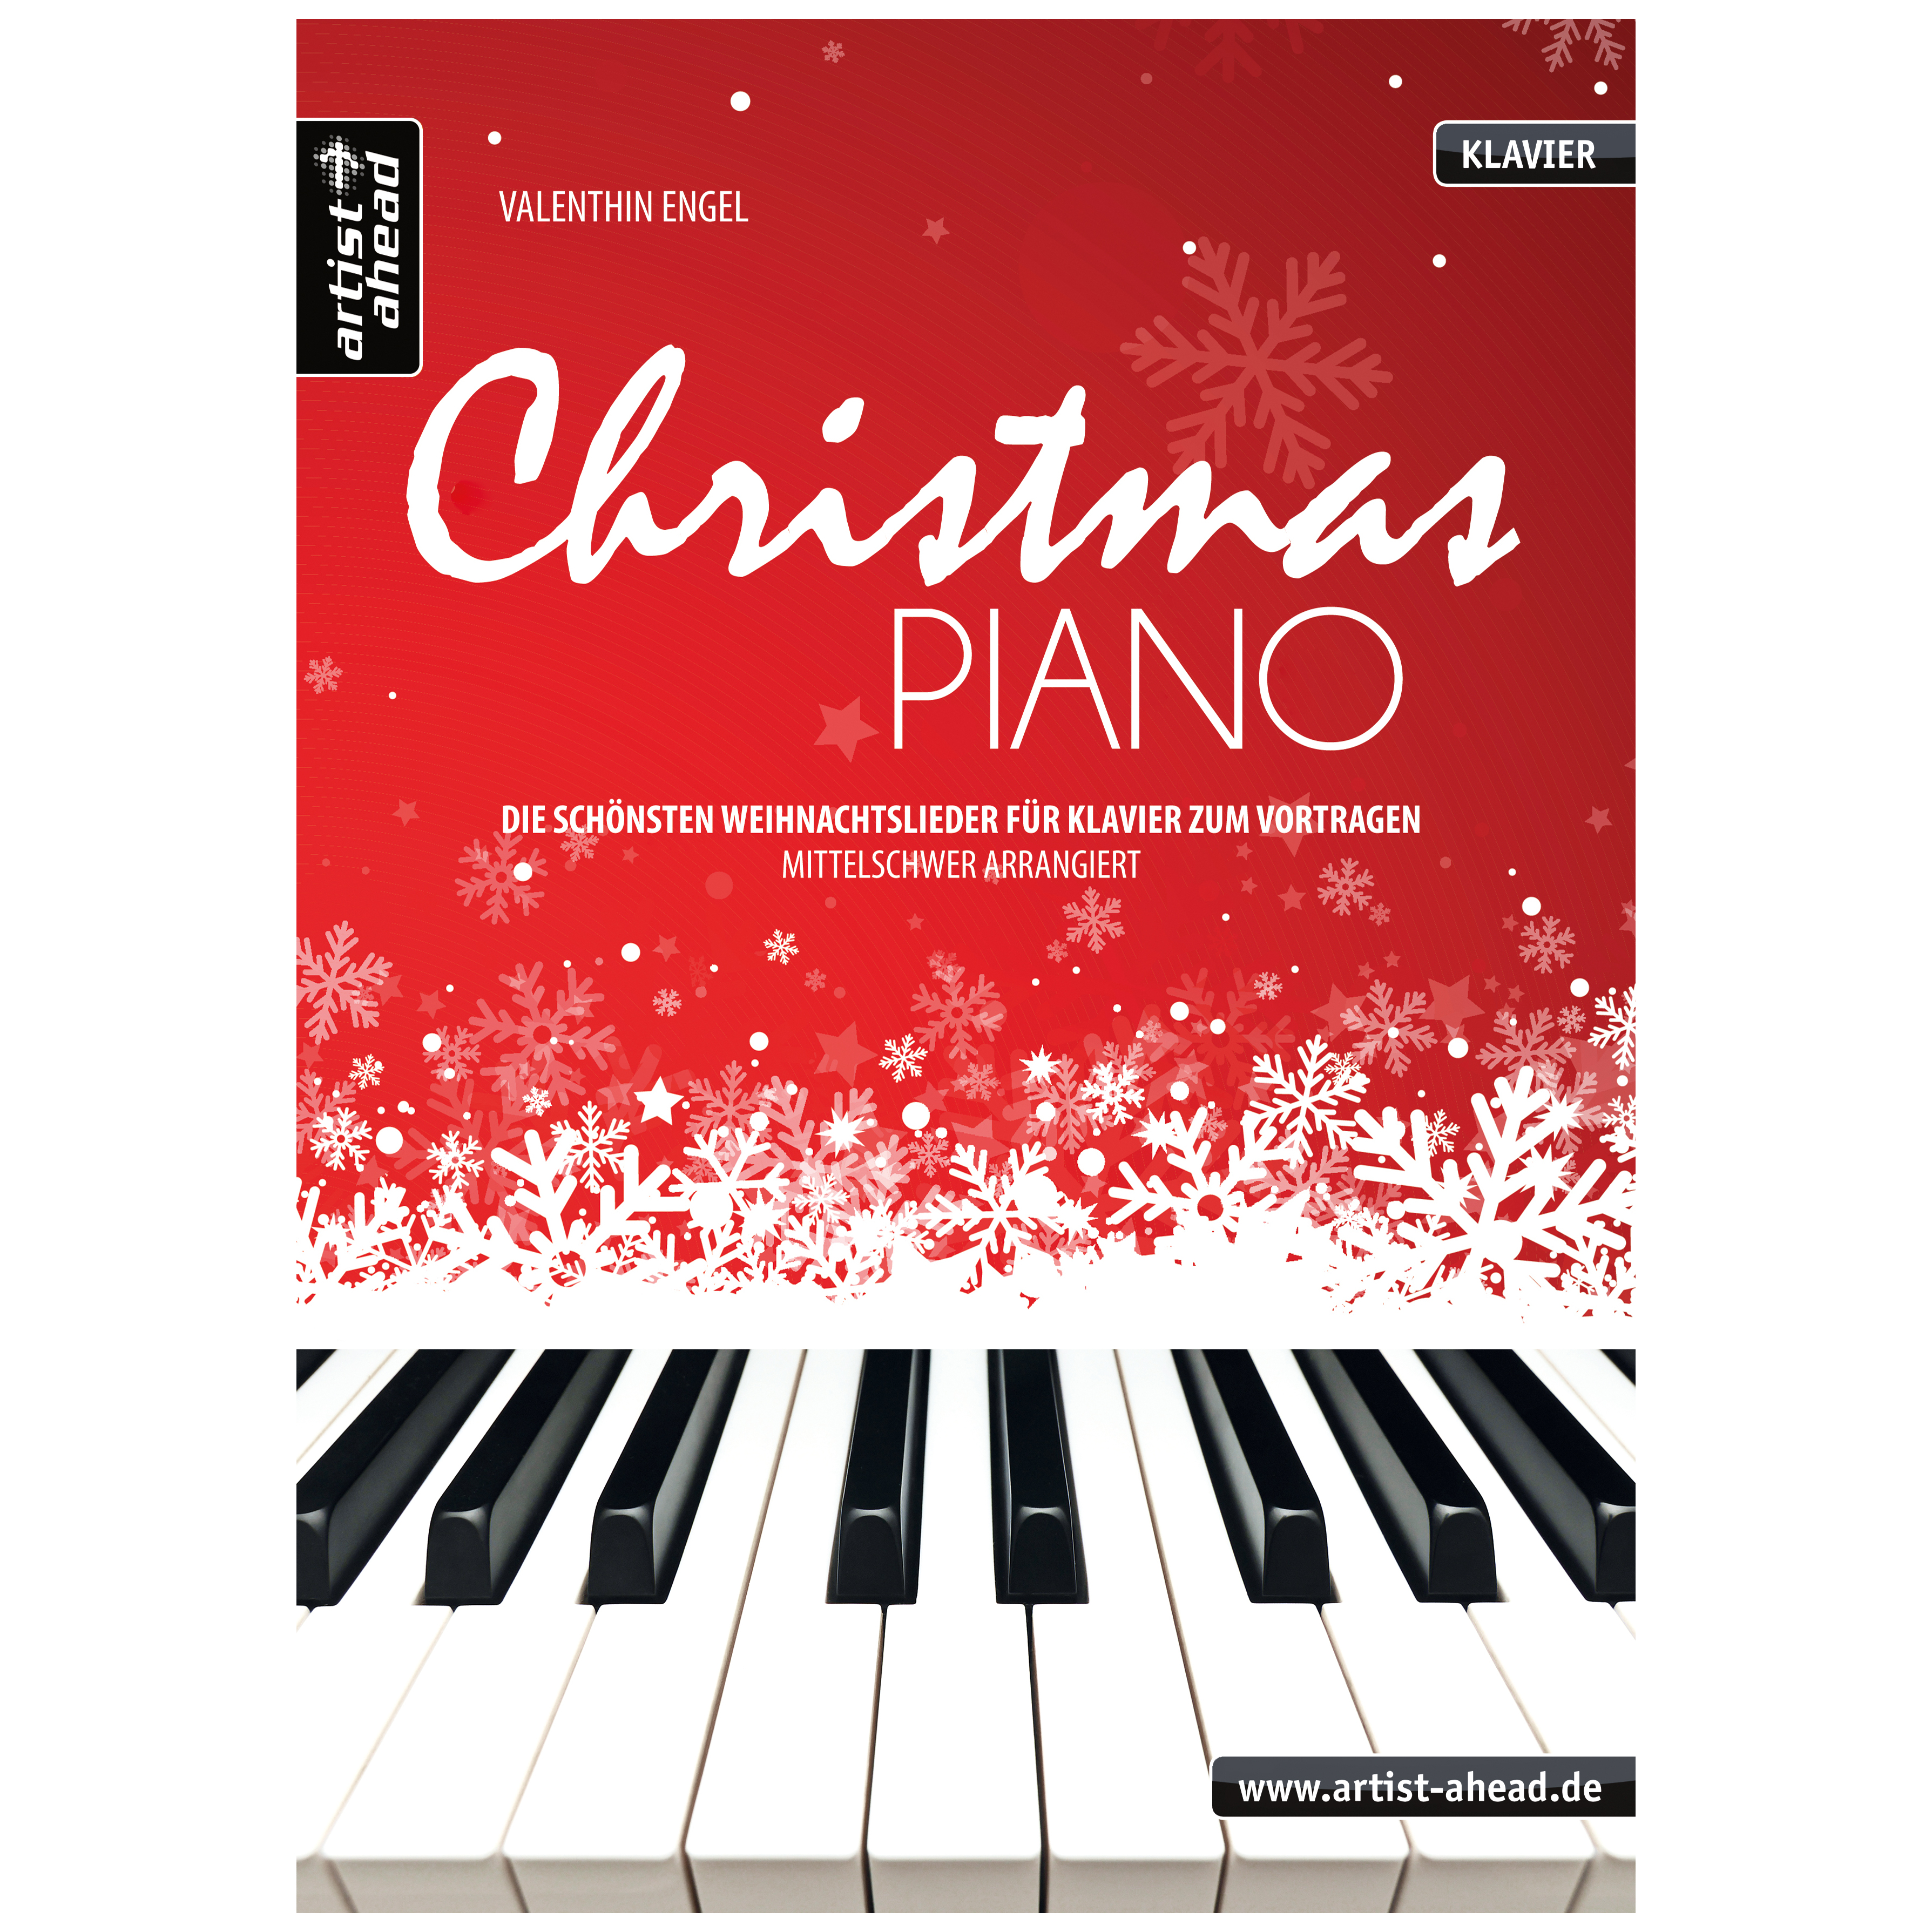 Artist Ahead Christmas Piano - Valenthin Engel